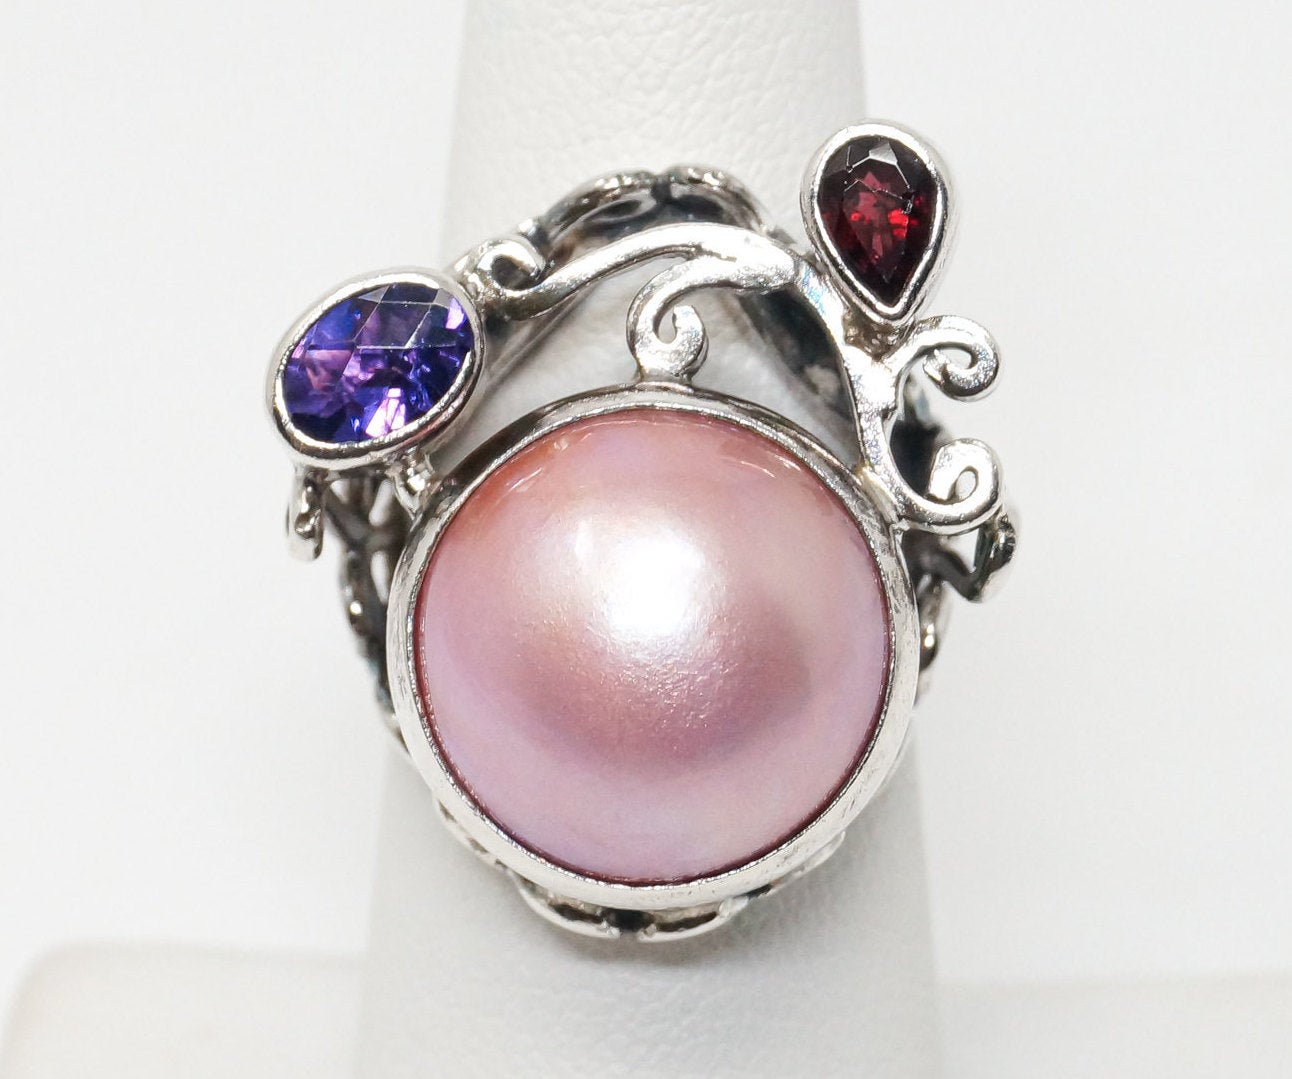 Designer BC Pink Pearl Amethyst Garnet Sterling Silver Statement Ring SZ 6.25